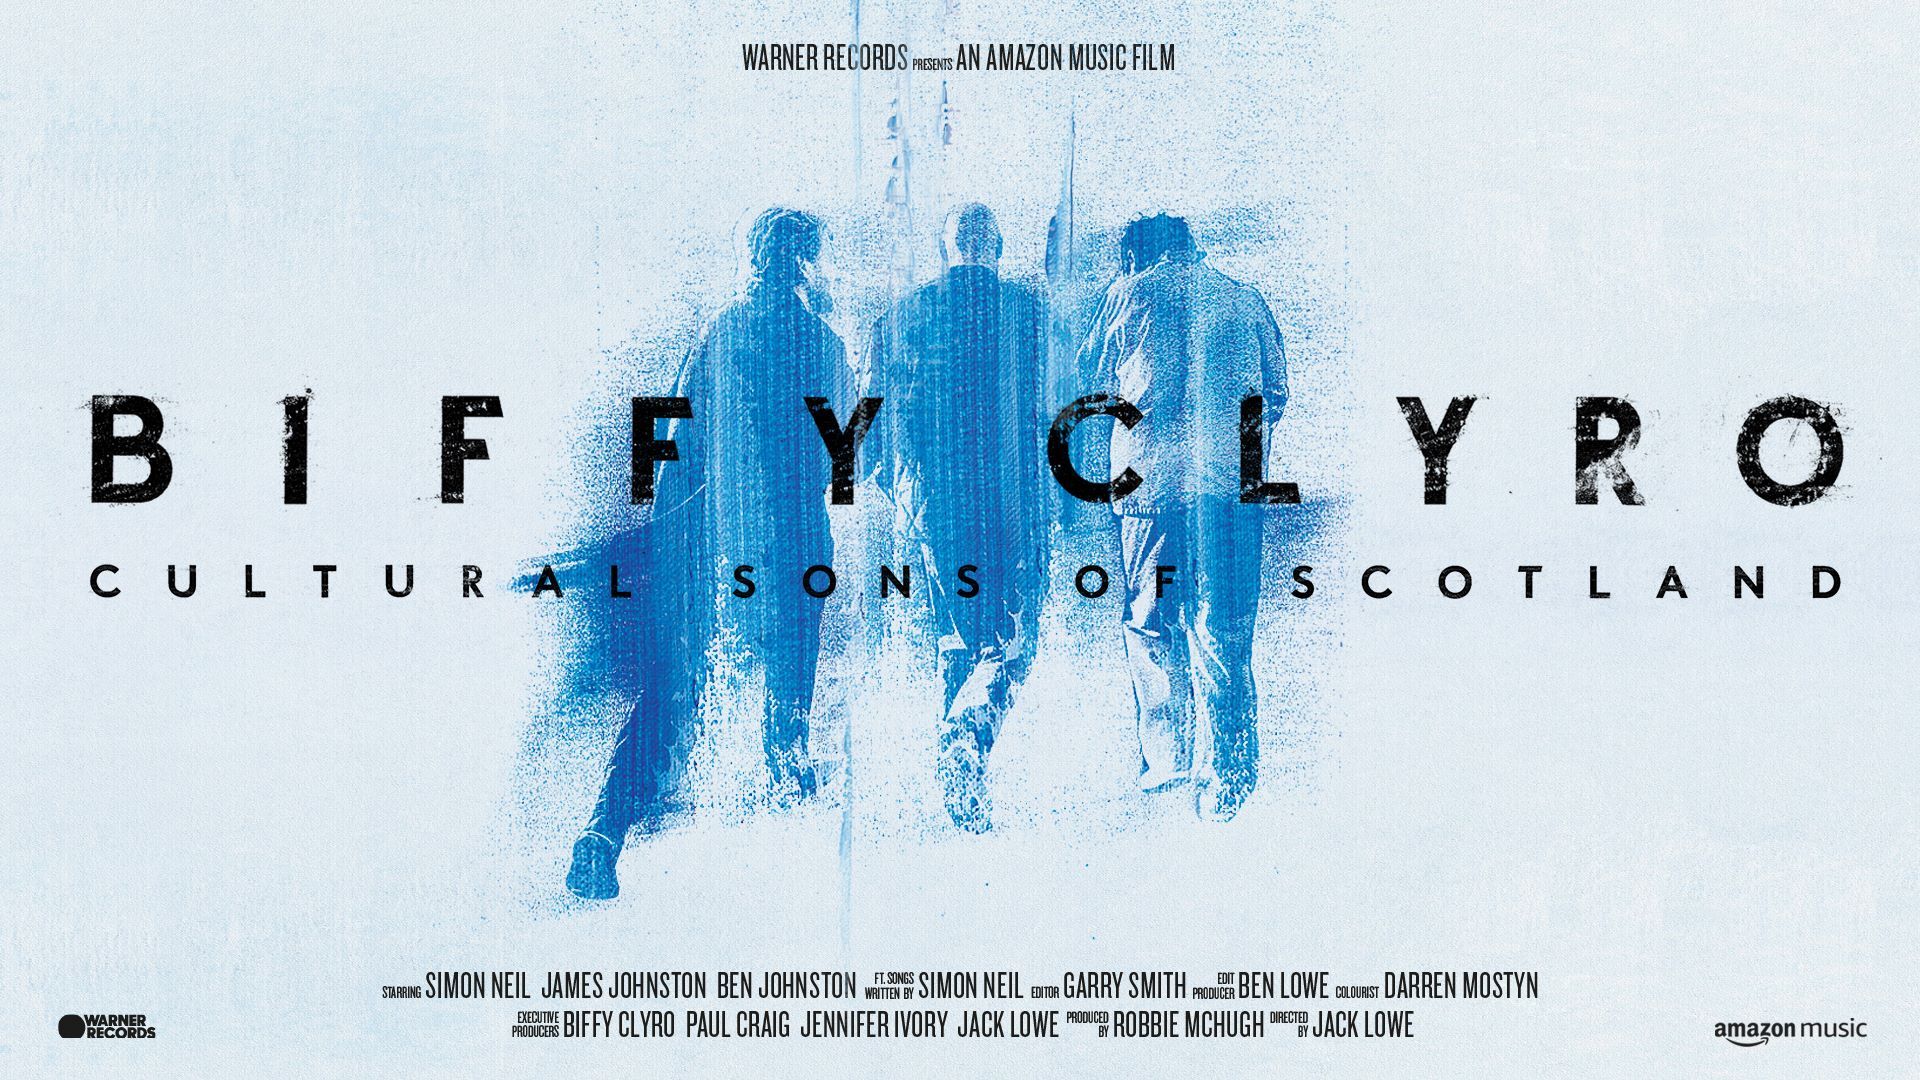 "Biffy Clyro: Cultural Sons of Scotland" ab 25. Februar auf Prime Video verfügbar